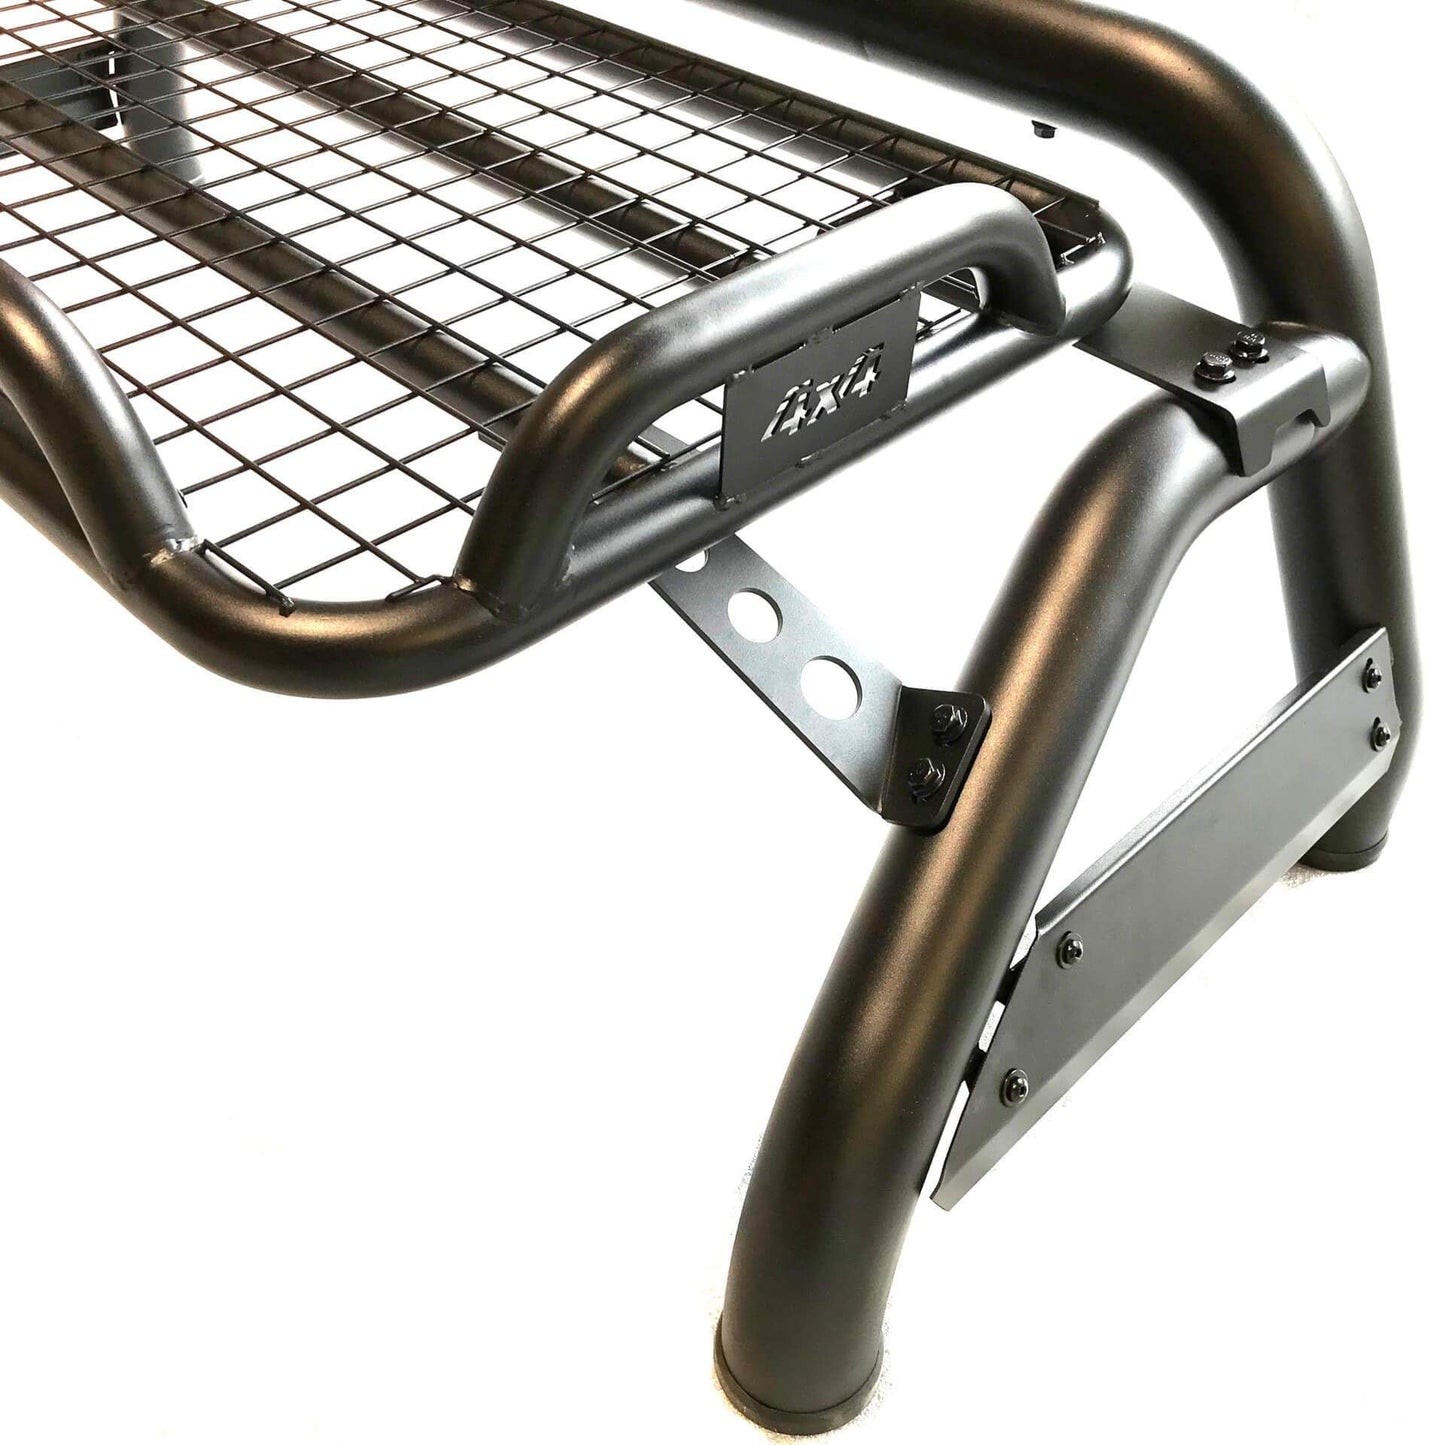 Black Short Arm Roll Sports Bar Cargo Basket Rack for the Mitsubishi L200 2015+